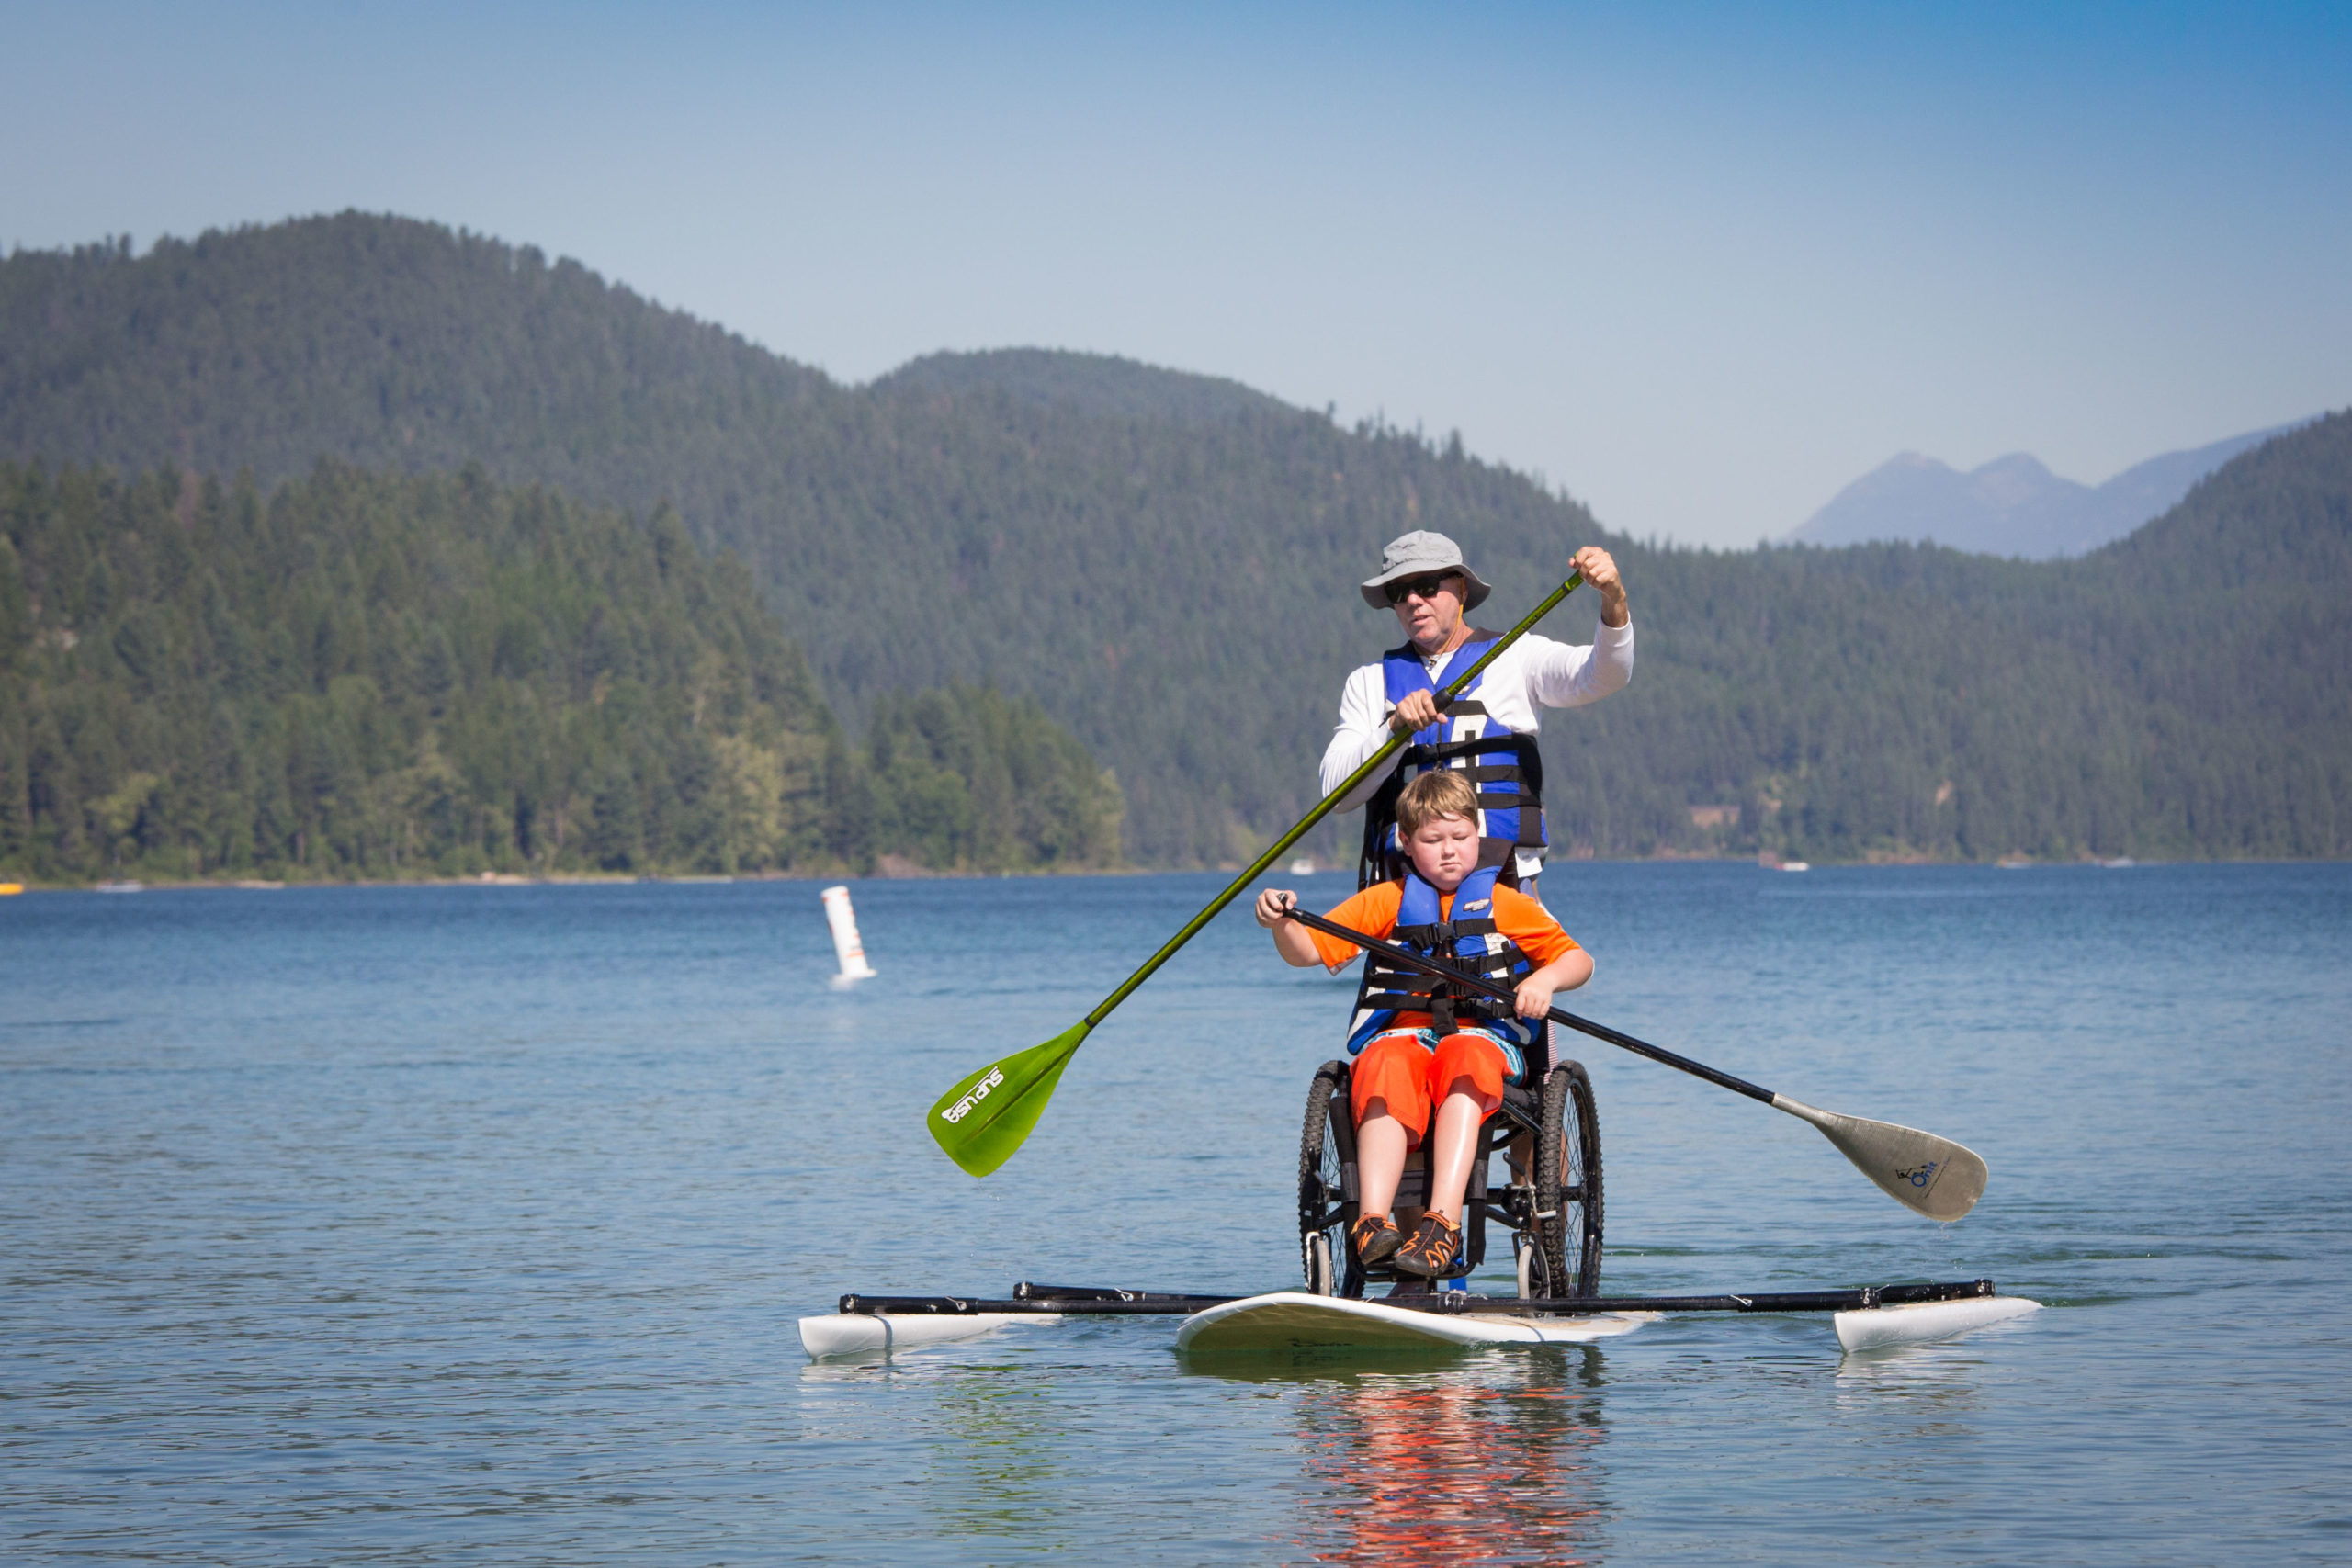 WC paddle board athlete on lake